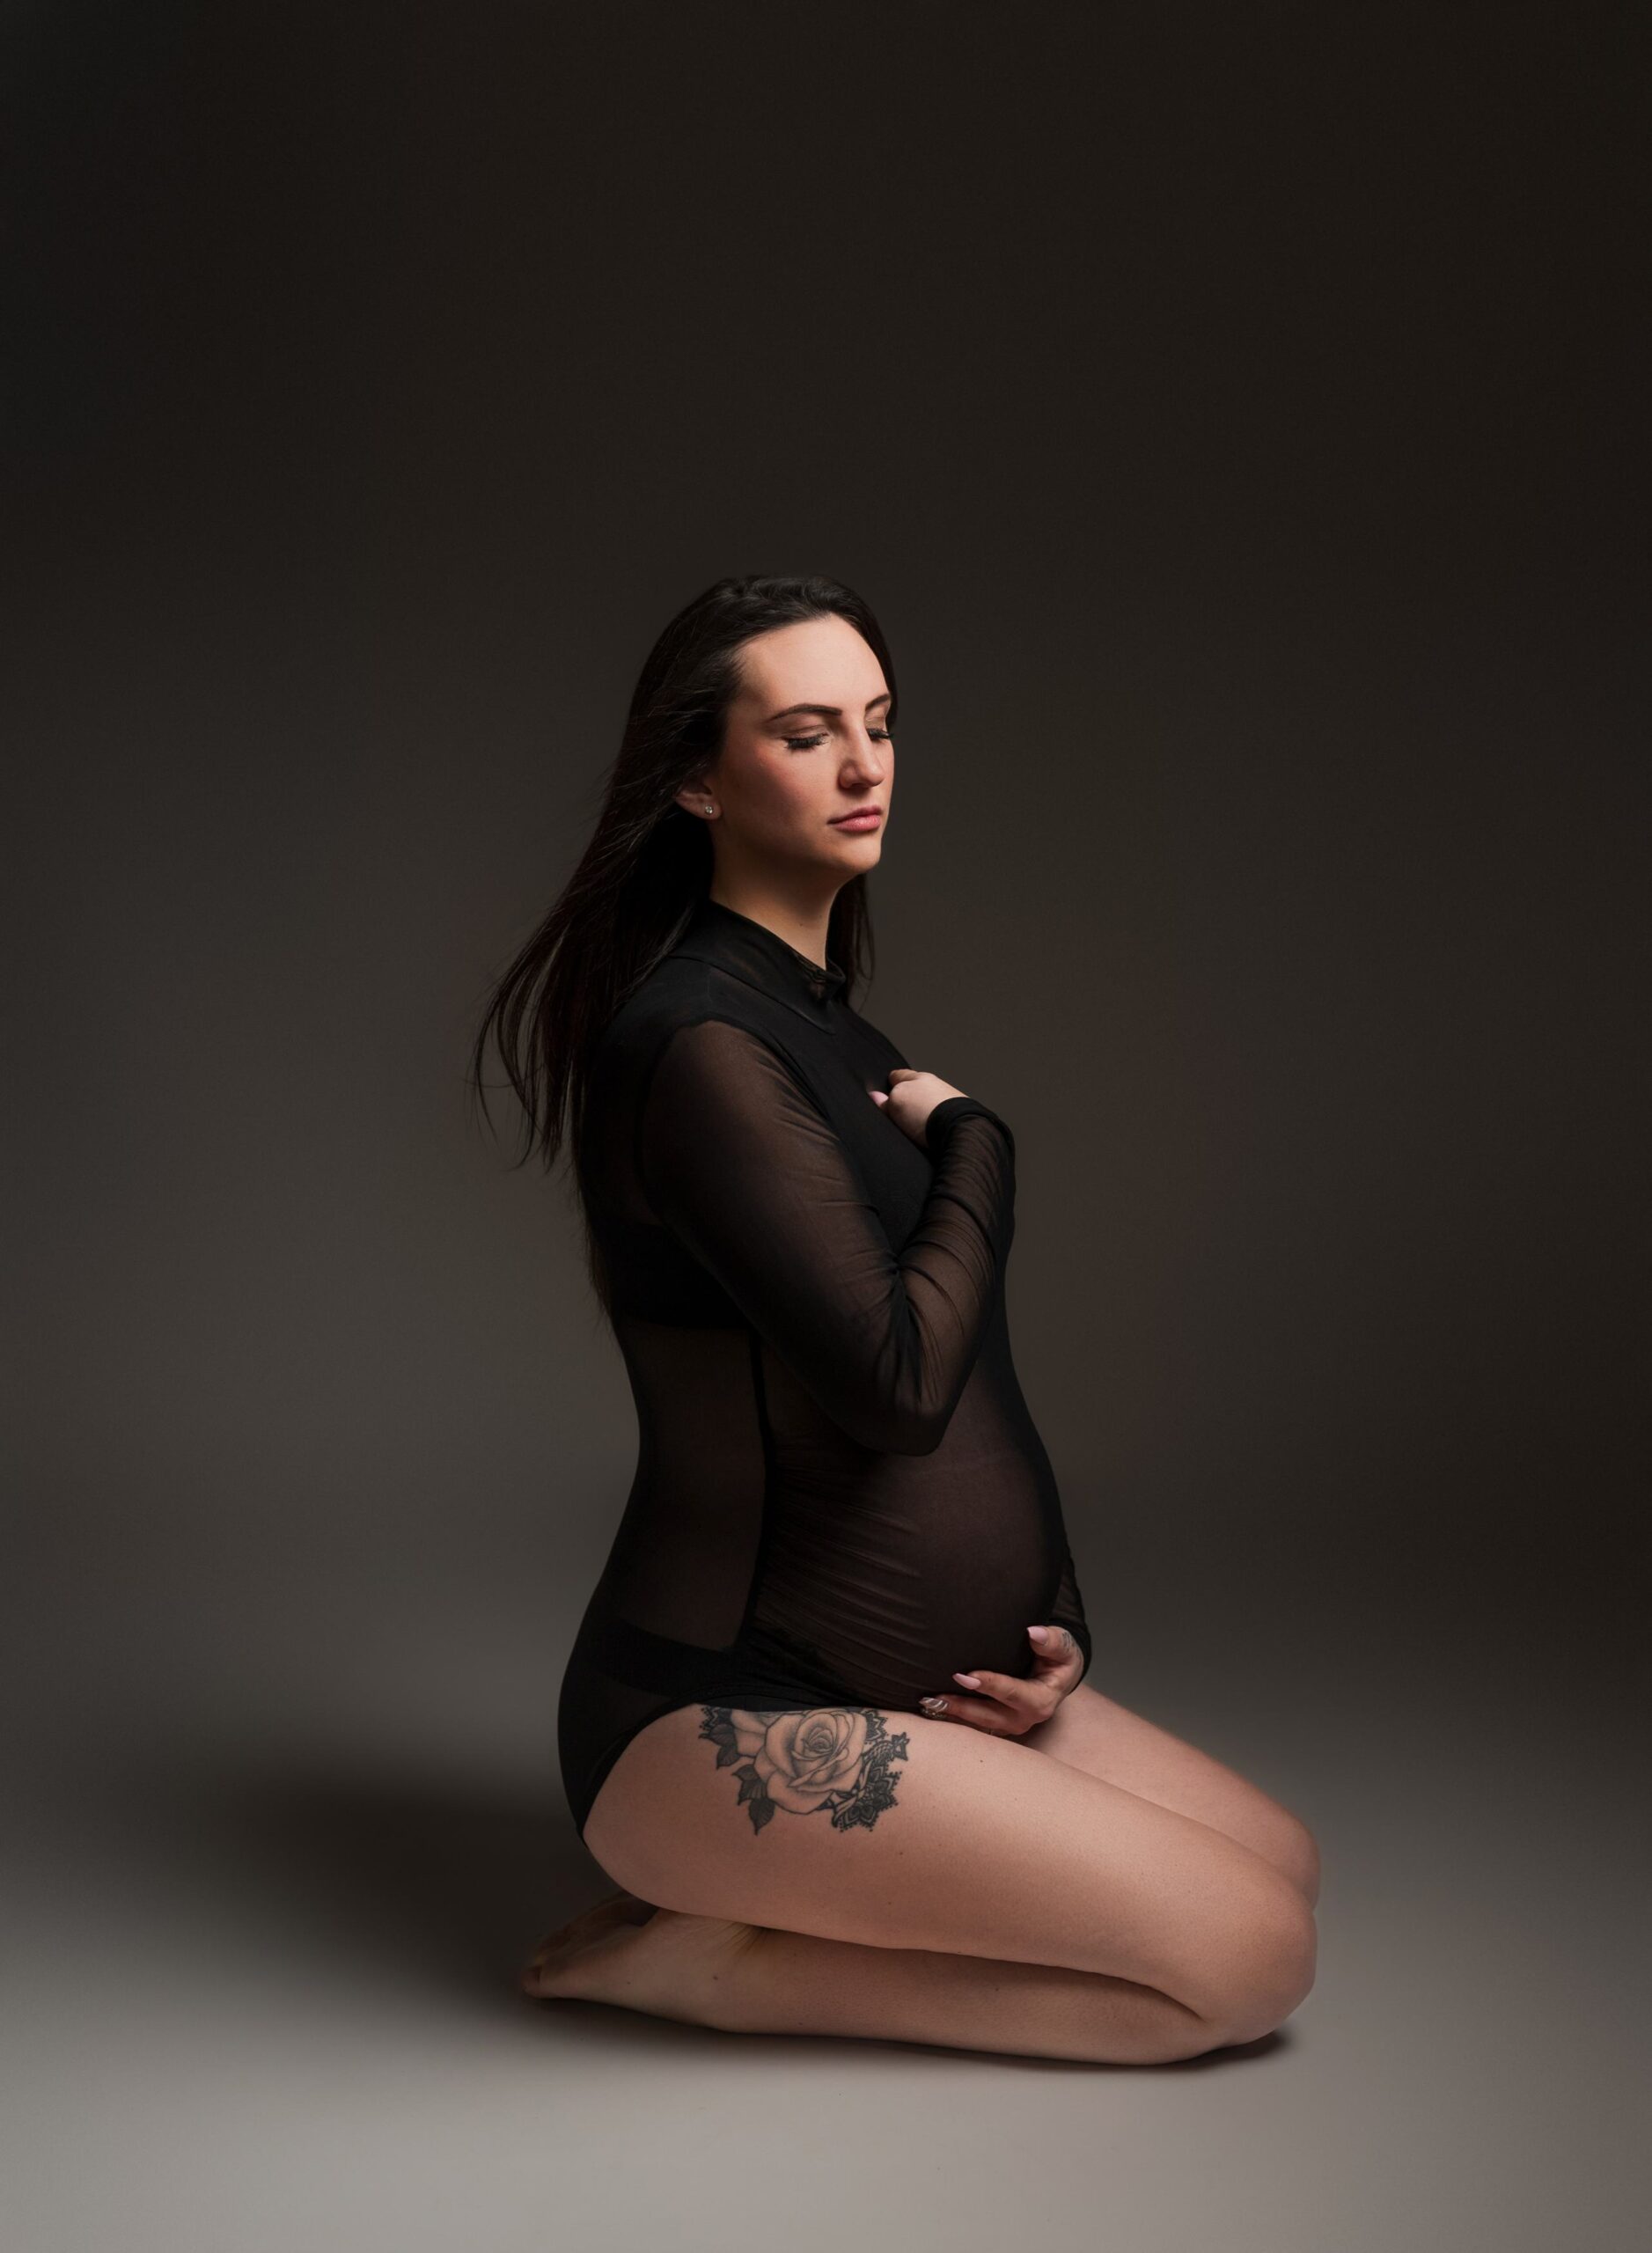 A pregnant woman is kneeling in a photography studio in Saint John, weairng a black bodysuit